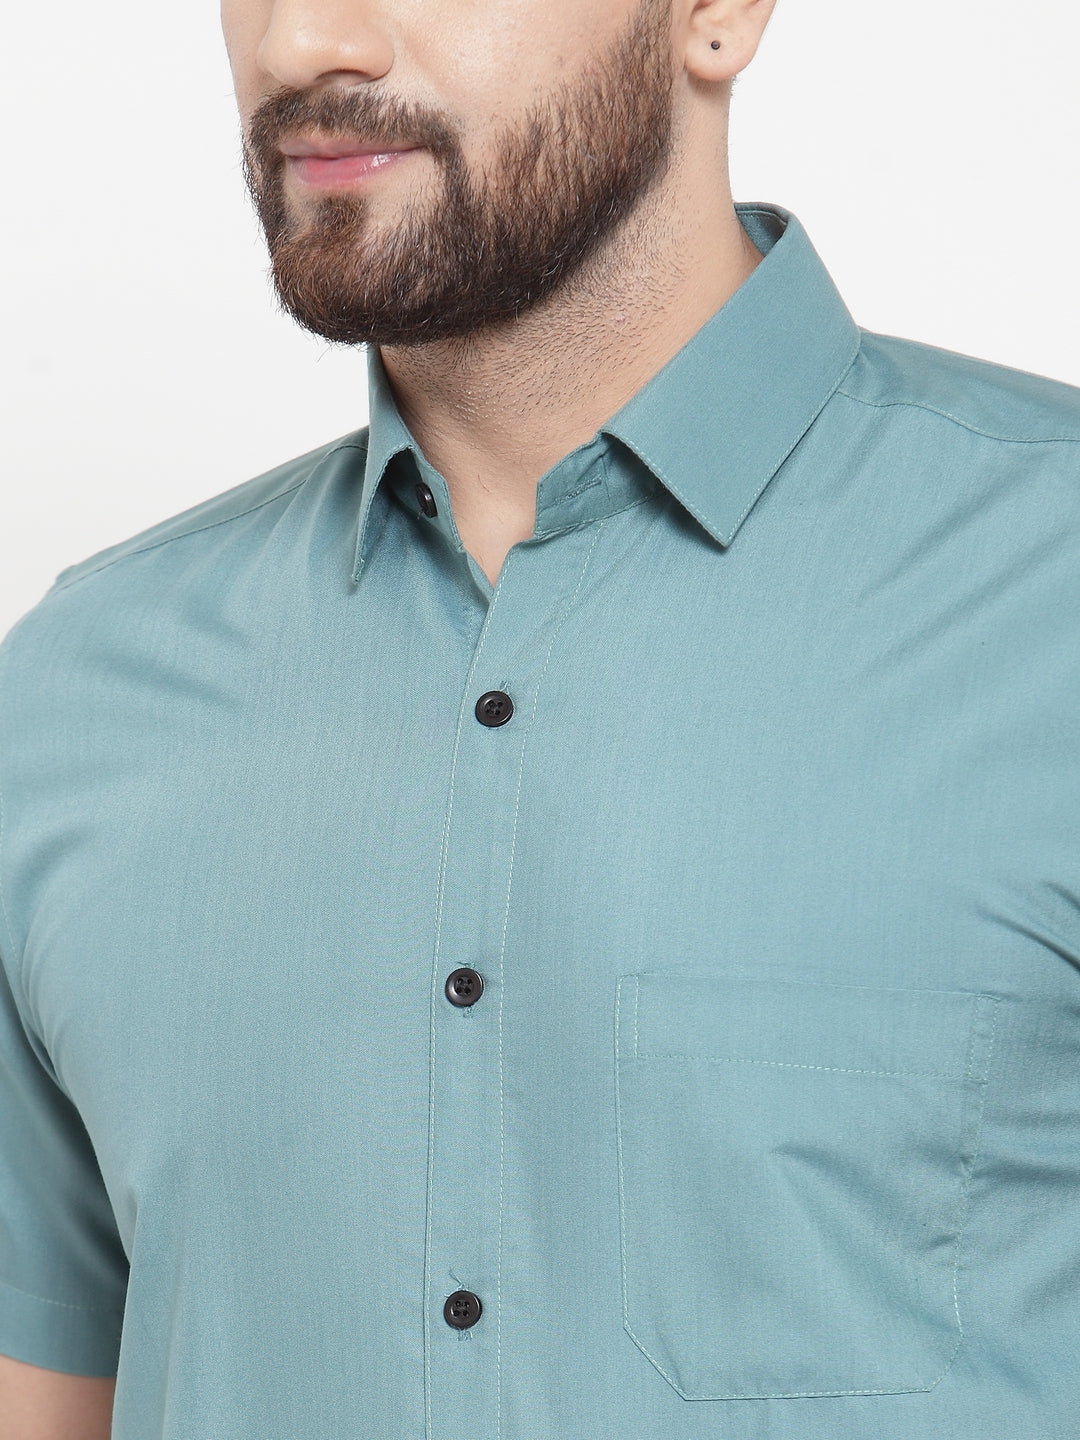 Men's Green Cotton Half Sleeves Solid Formal Shirts ( SF 754Aqua ) - Jainish